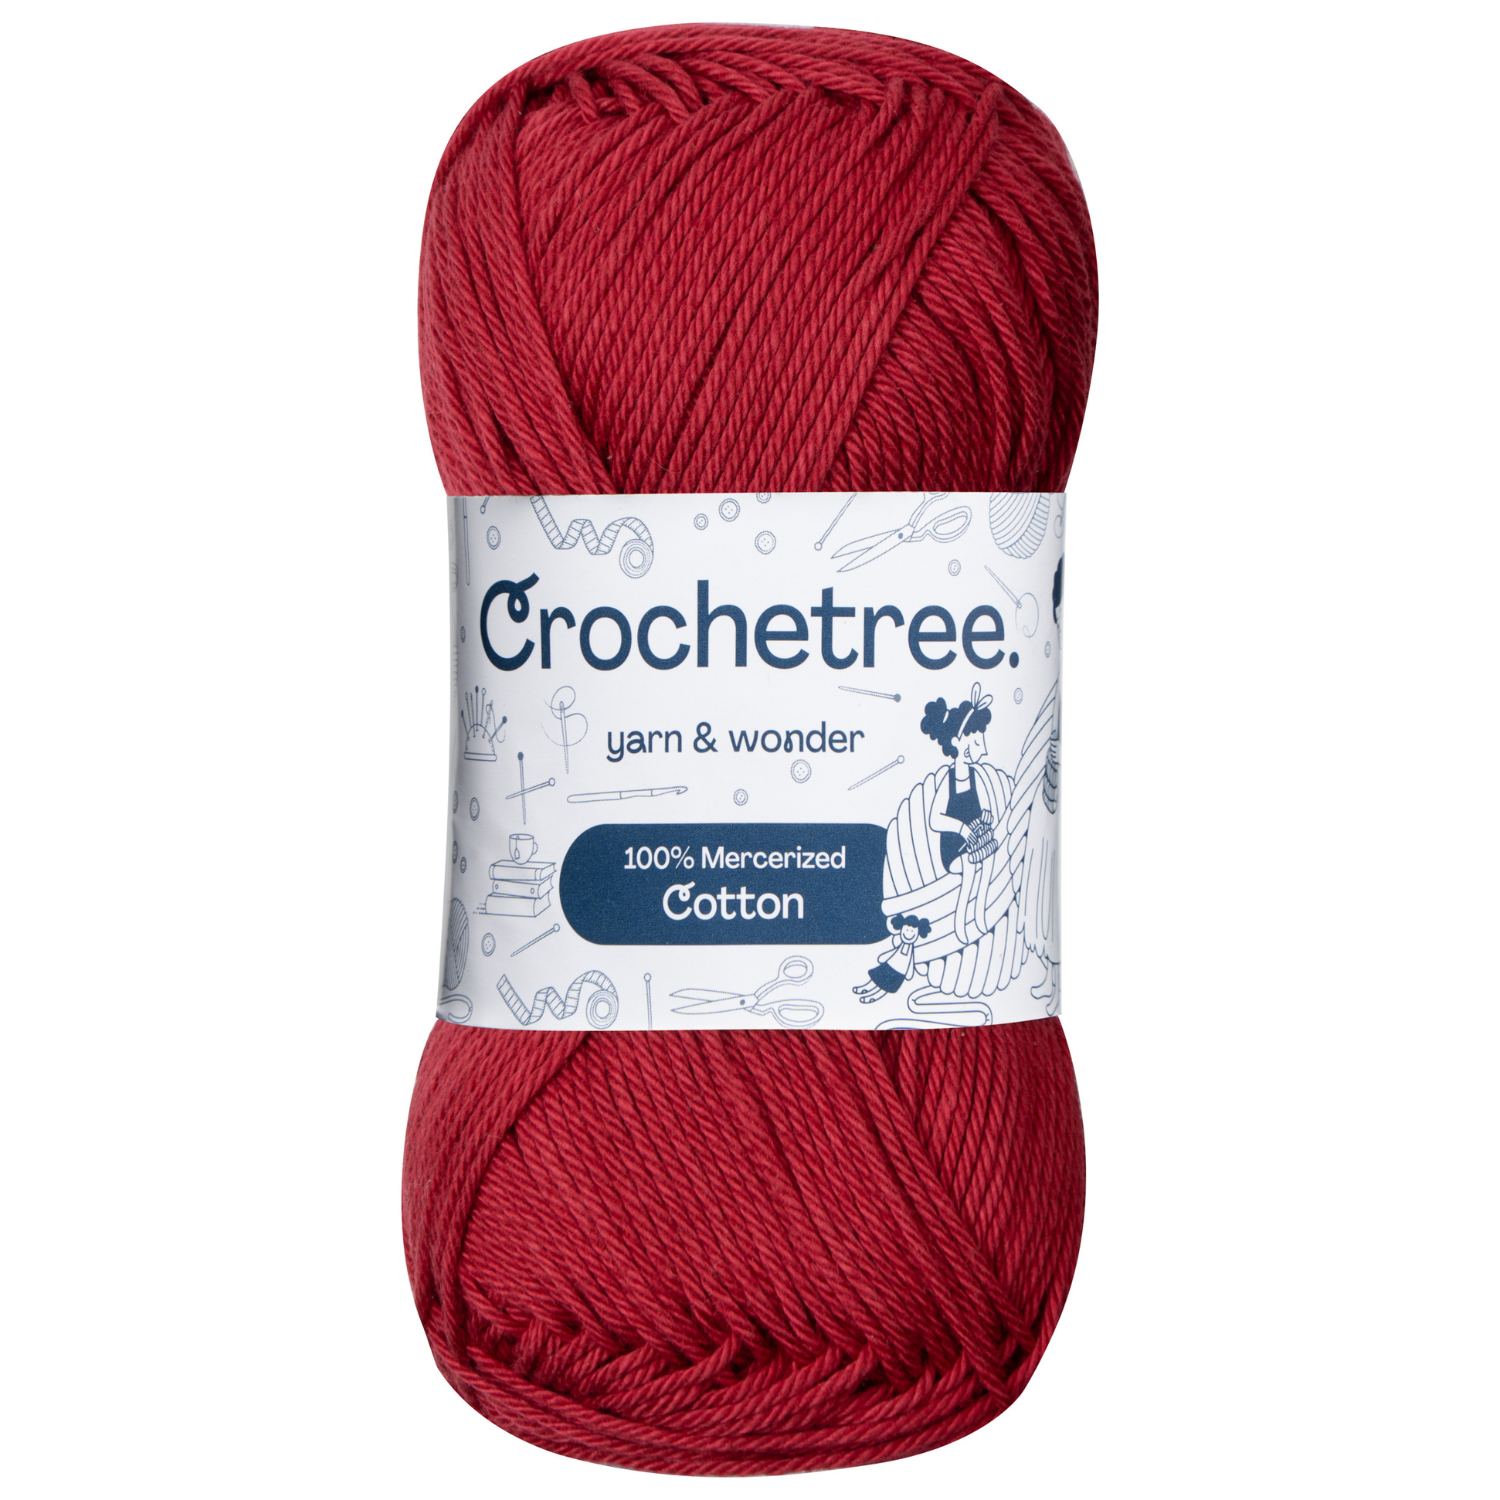 YUYOYE 100% Mercerized Cotton Yarn for Crochet and Knitting - 100g,Grey-09